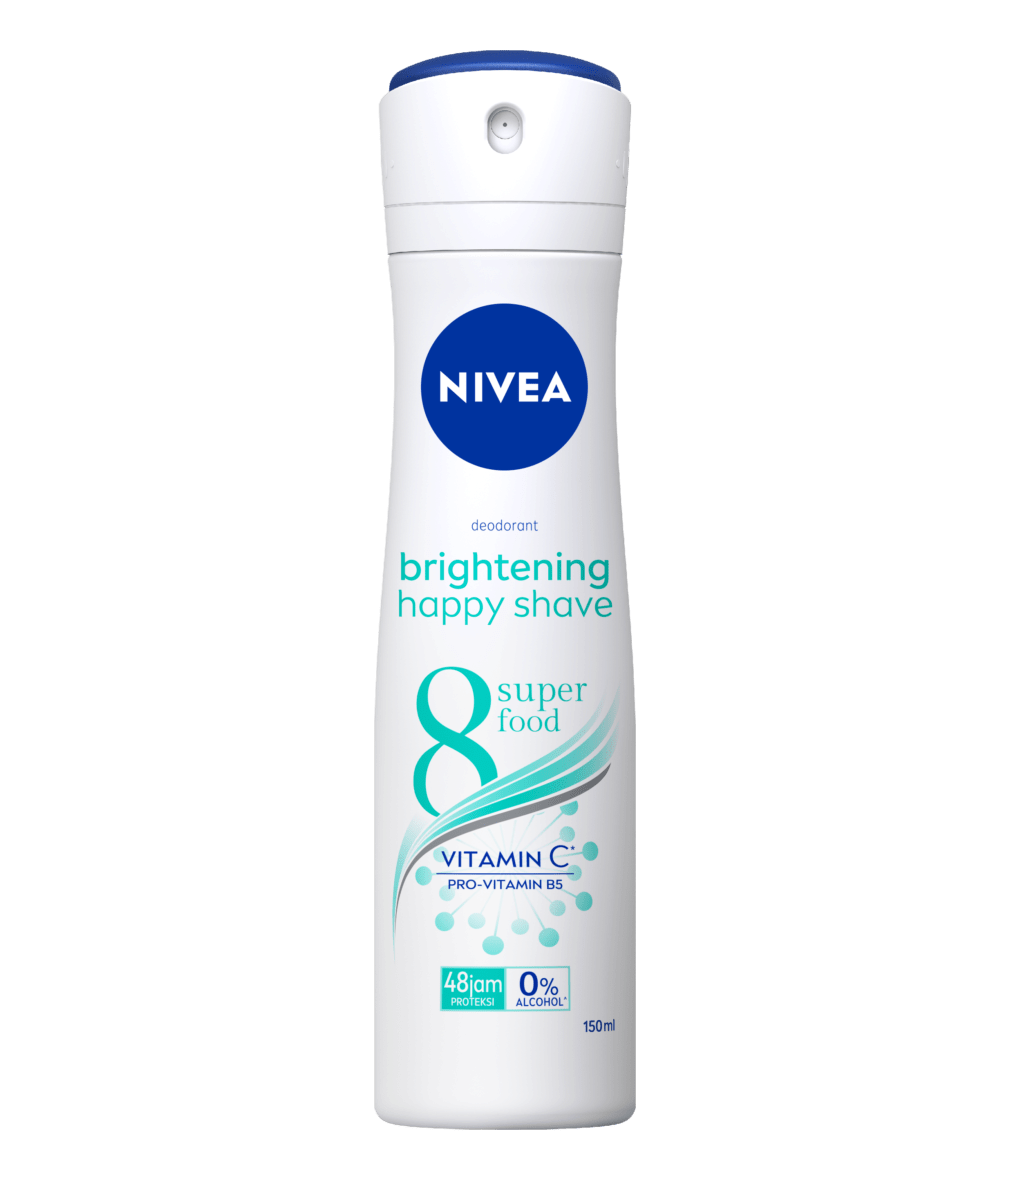 NIVEA Brightening Happy Shave 8 Superfood Deodorant Spray